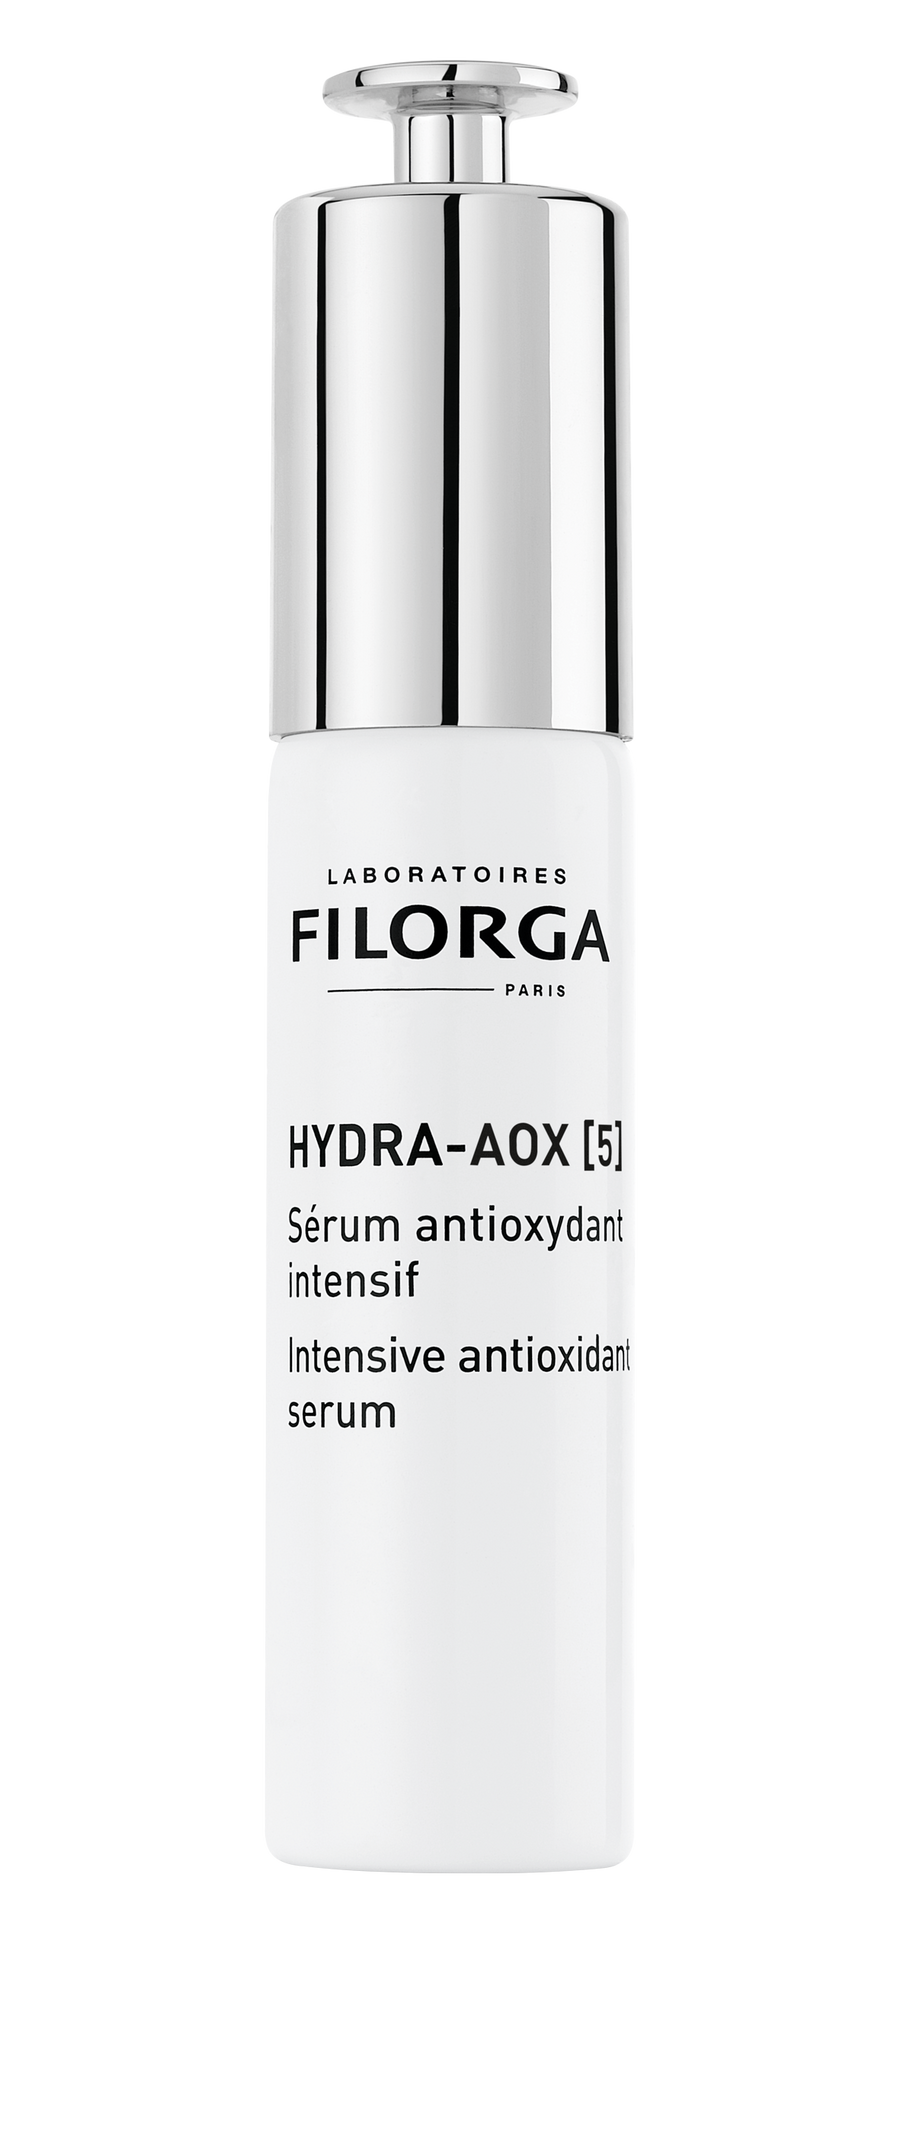 Filorga Hydra-AOX [5] 30ml